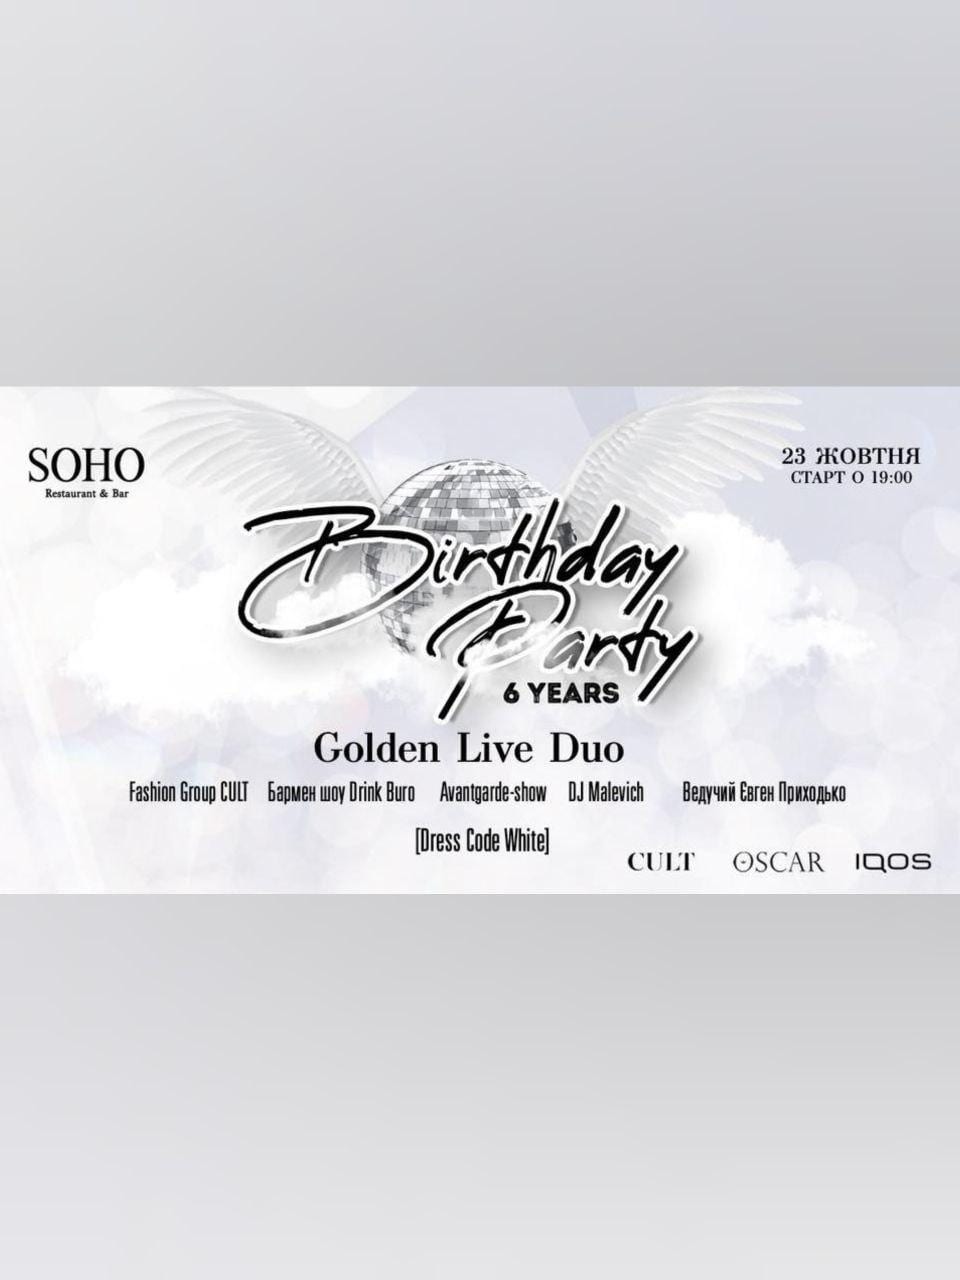 SOHO Birthday Party Днепр, 23.09.2020, цена, фото, купить билеты. Афиша Днепра